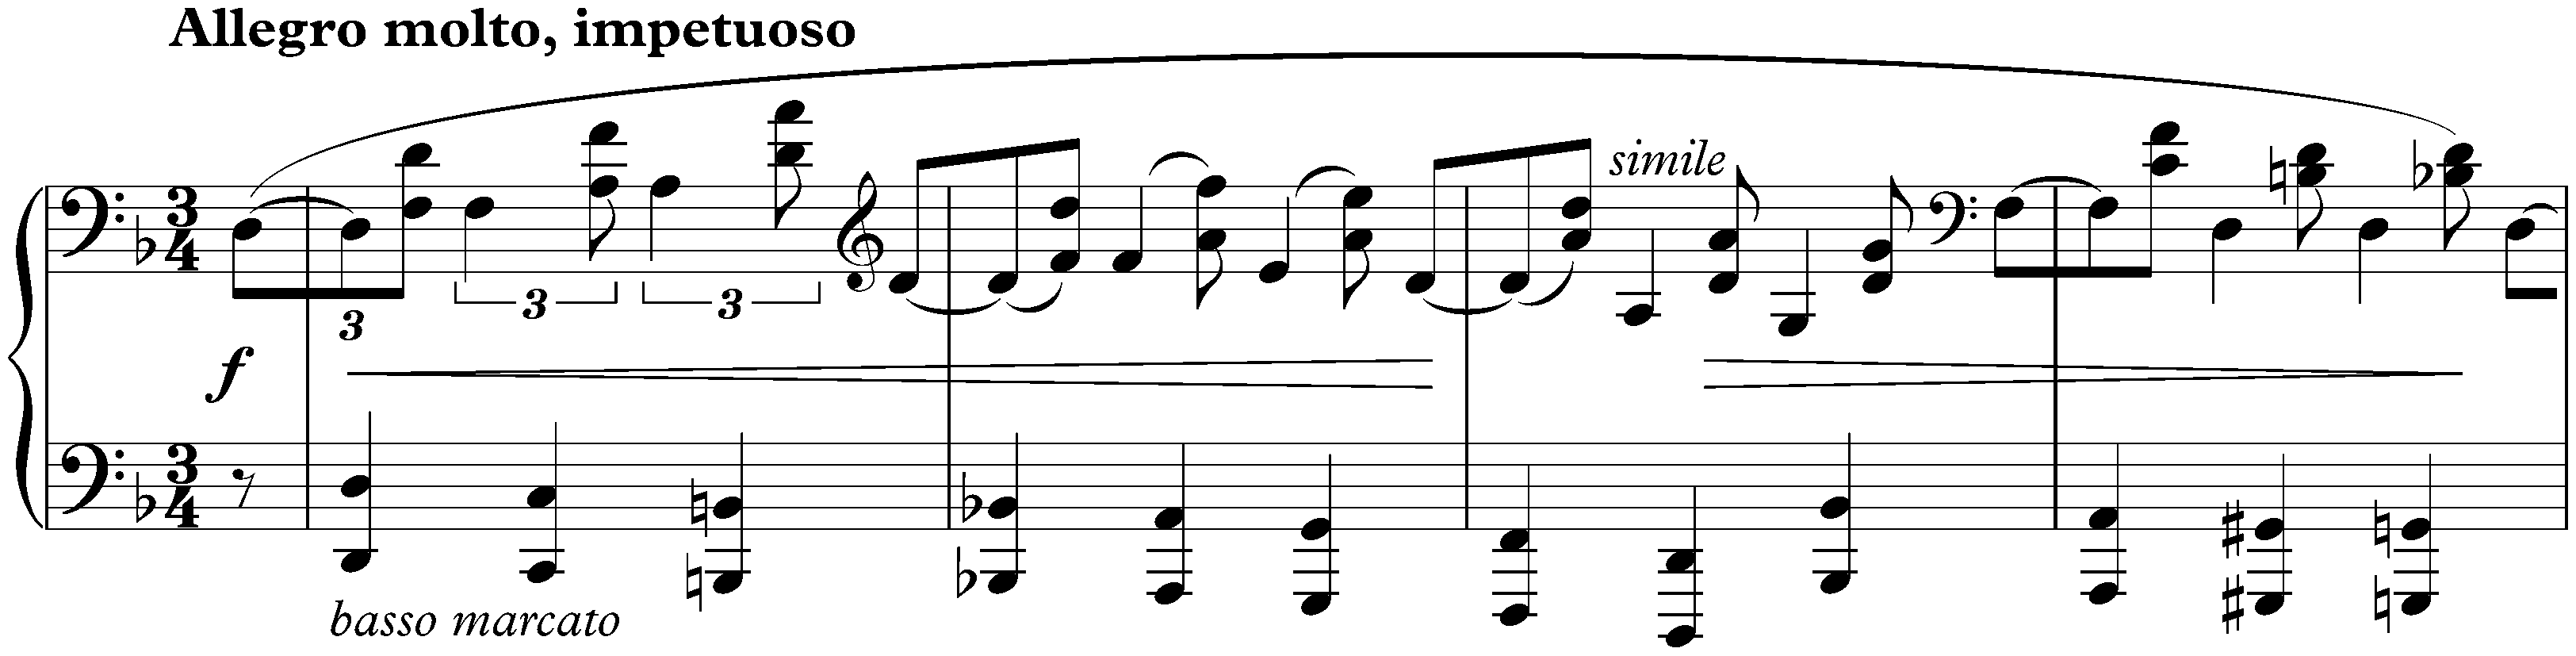 Nine Preludes, op. 1; 5. Allegro molto, impetuoso